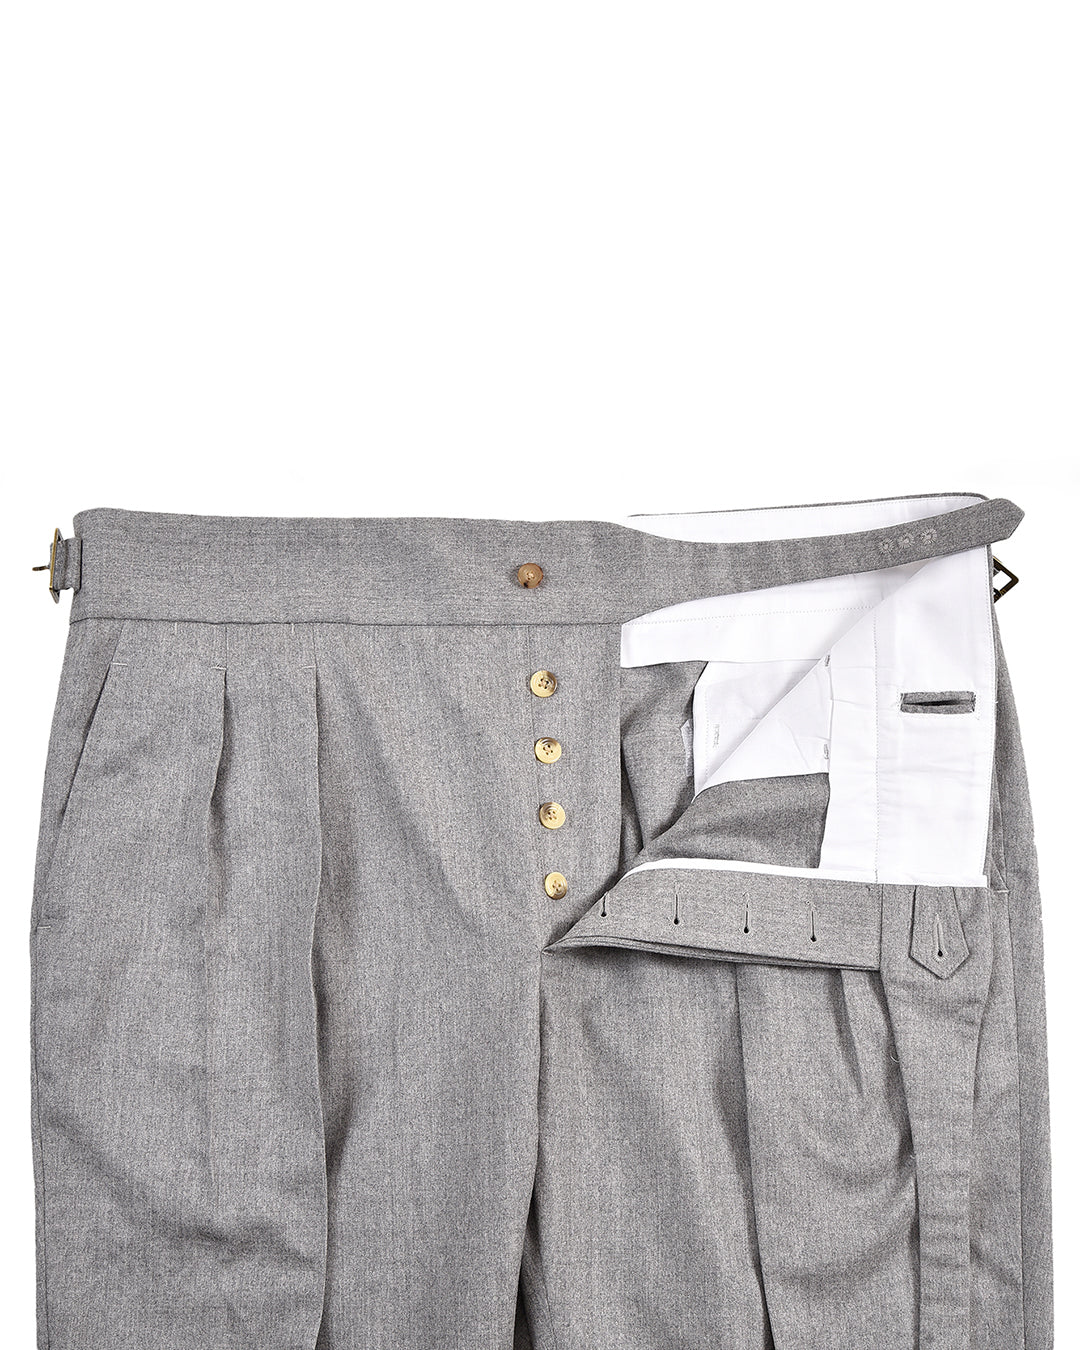 Gurkha Pant in Vitale Barberis Canonico - Flannels  Light Grey